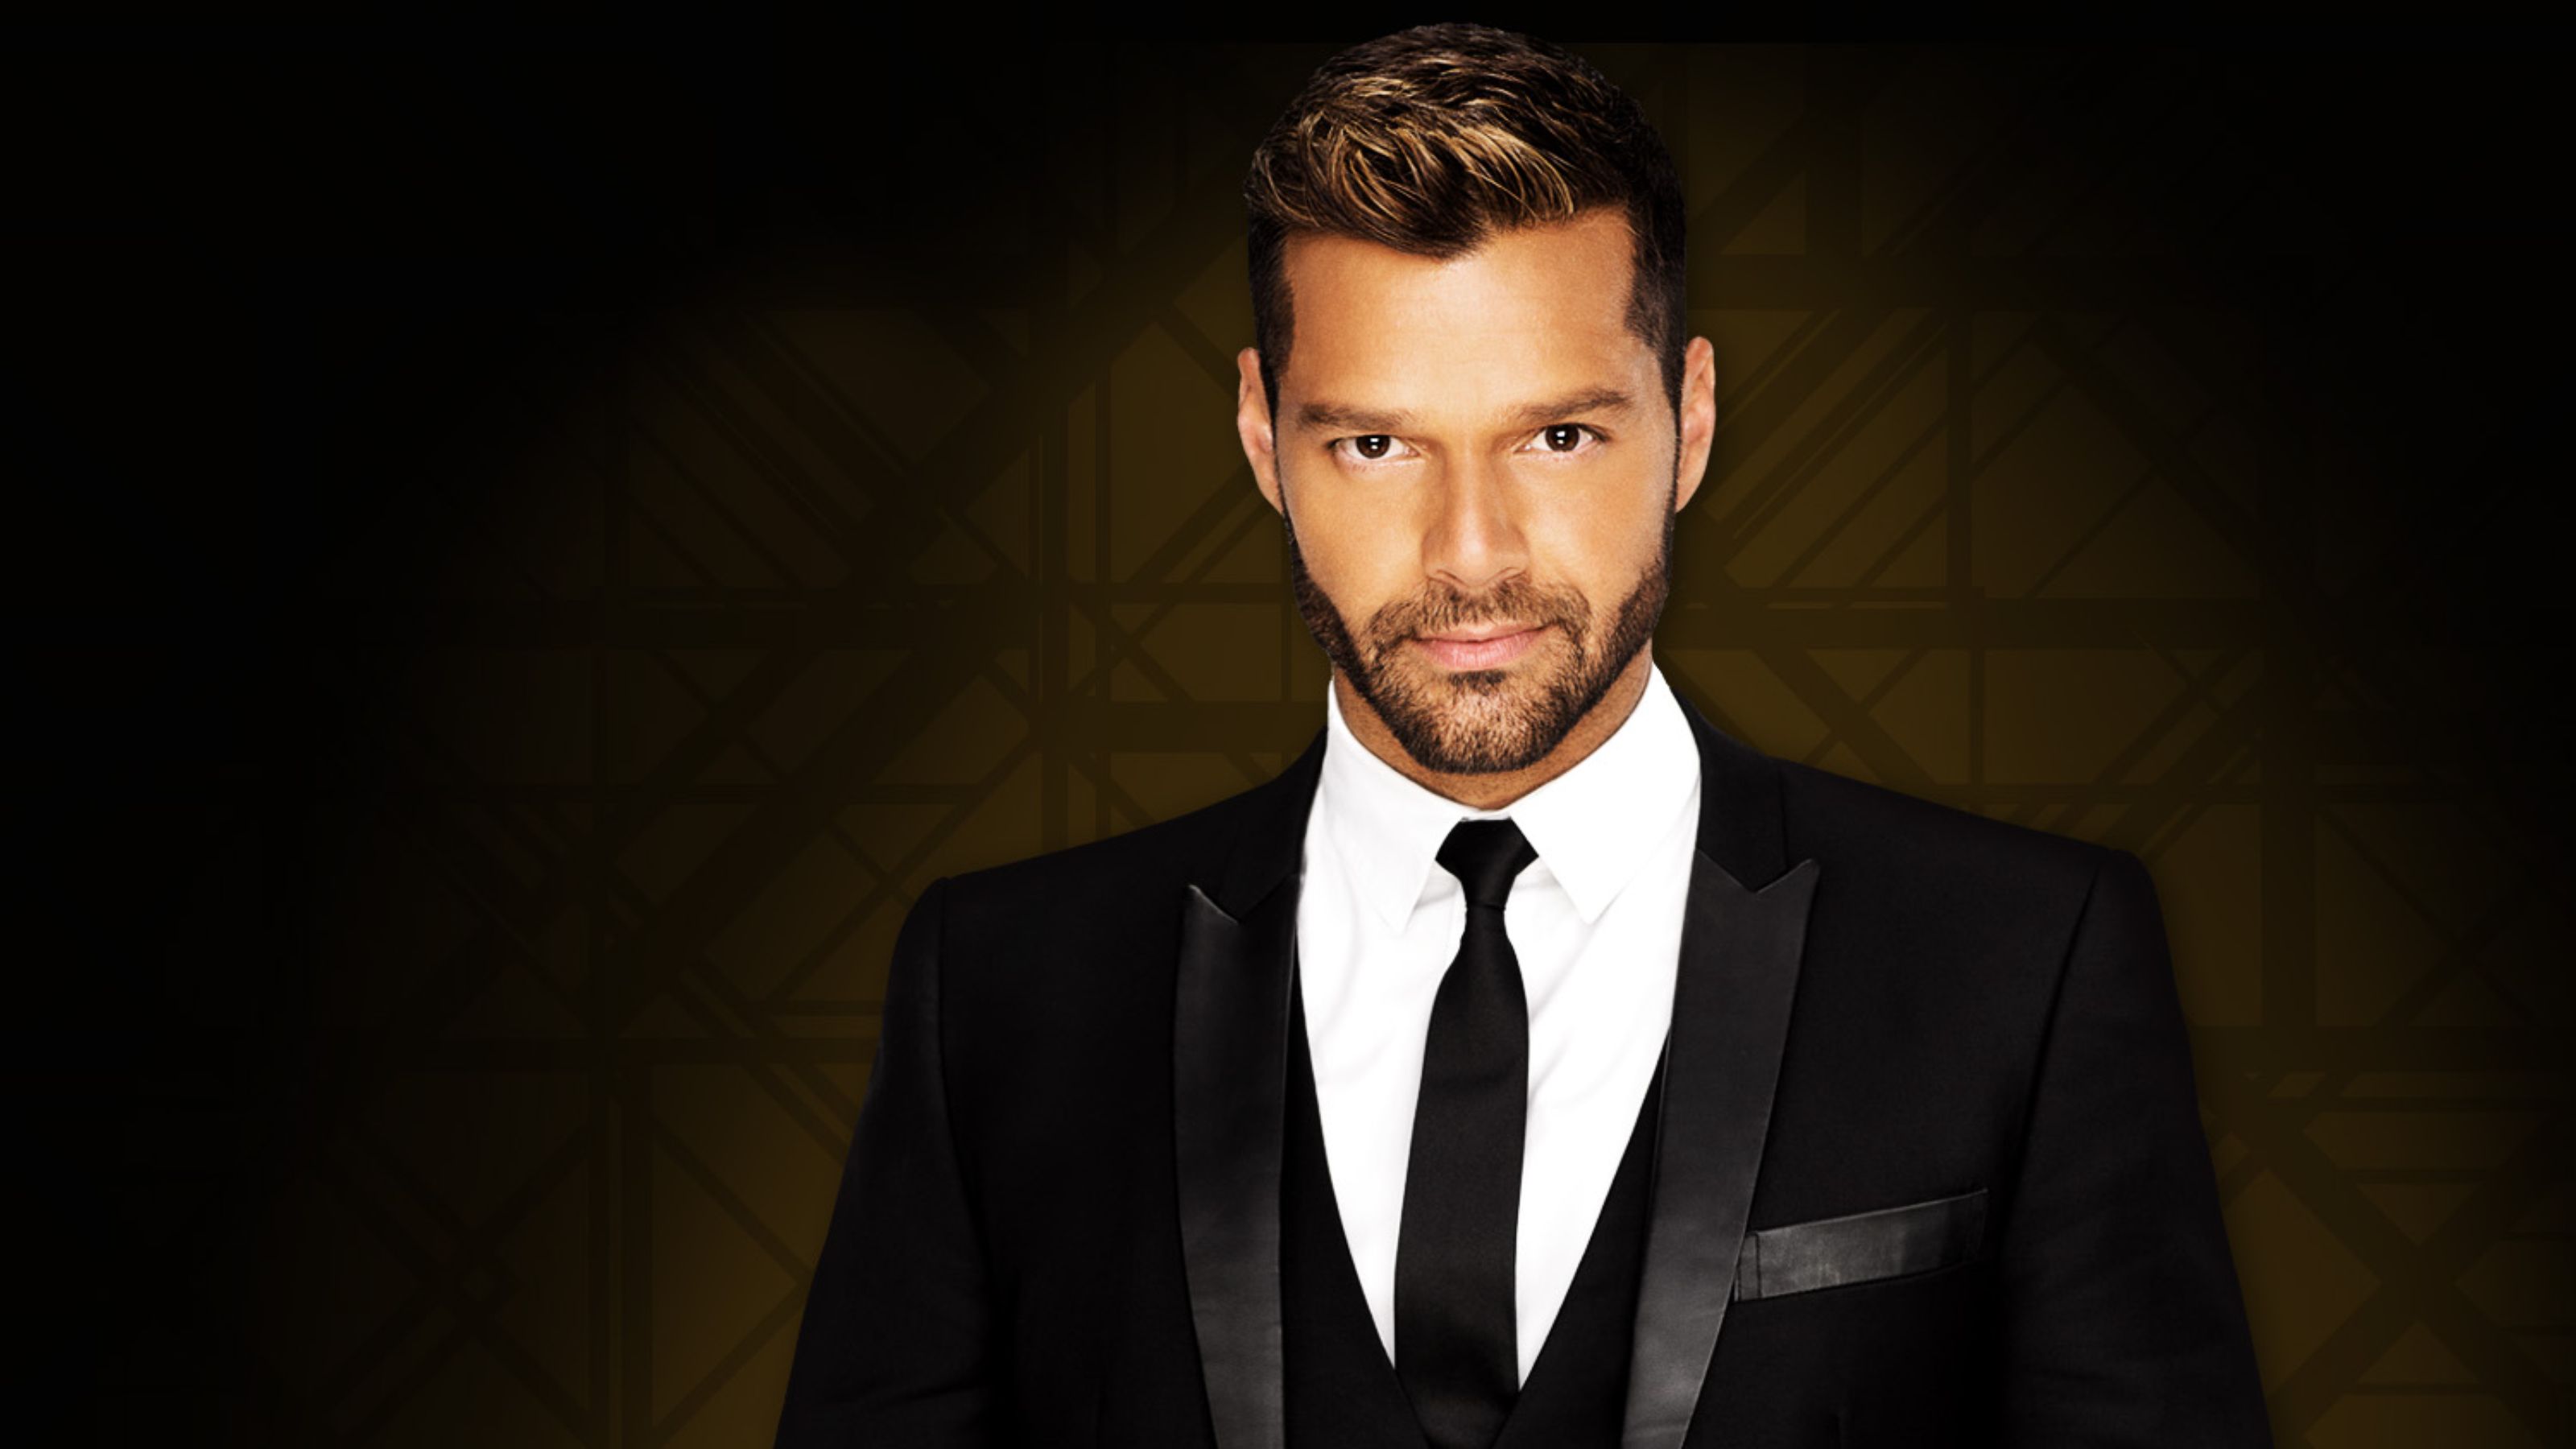 Ricky Martin protagonist në “American Crime Story”